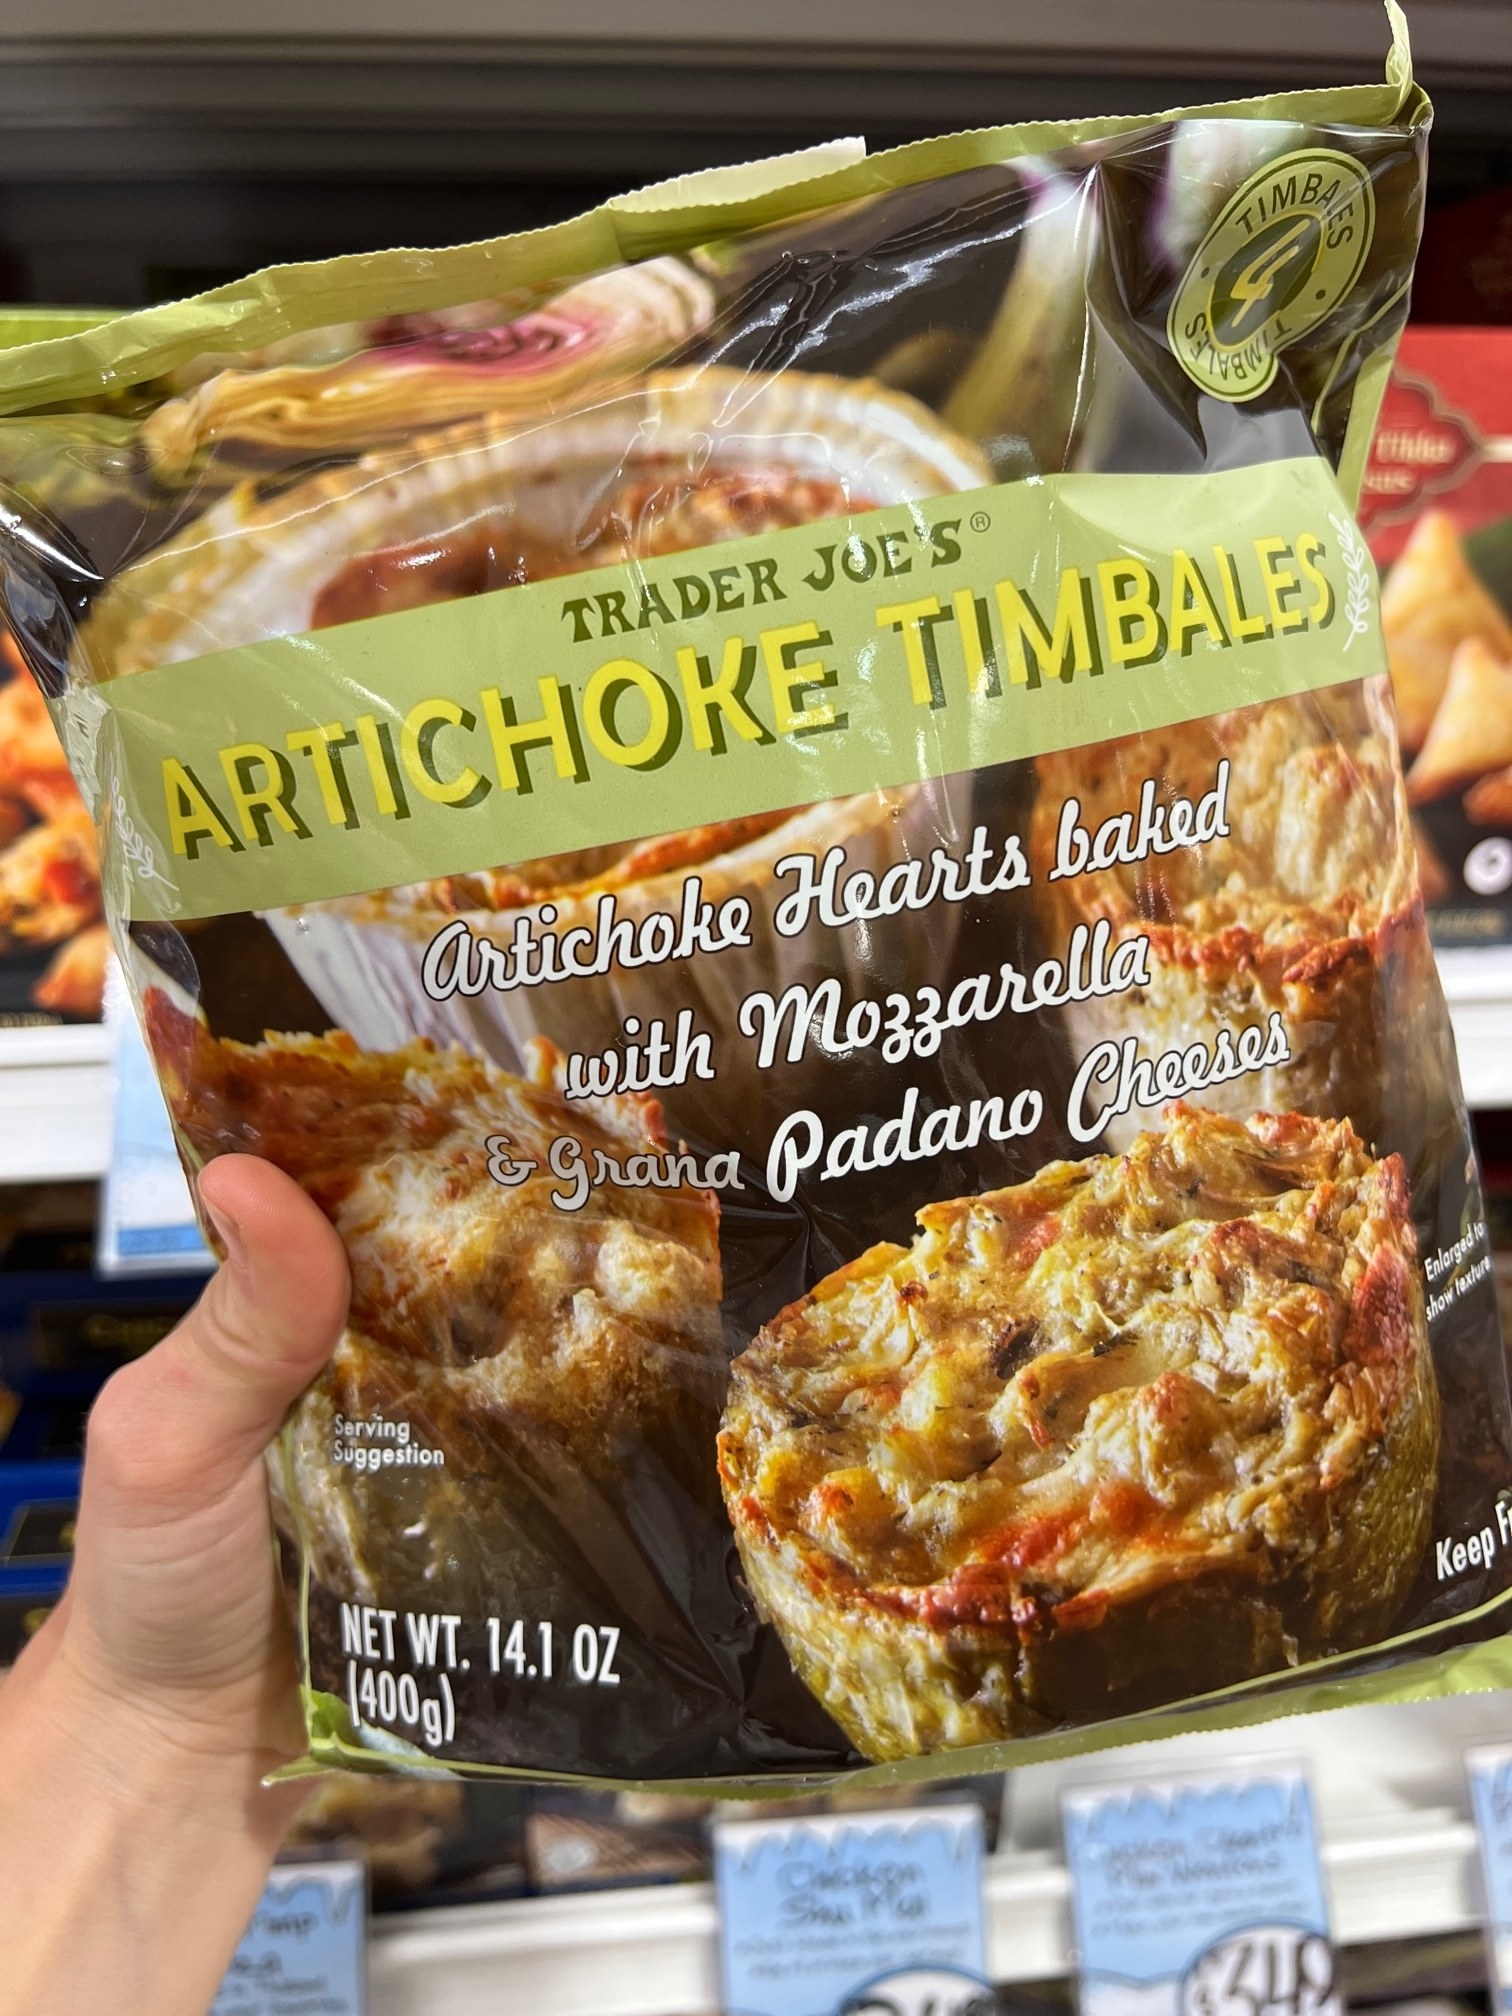 A bag of Artichoke Timbales